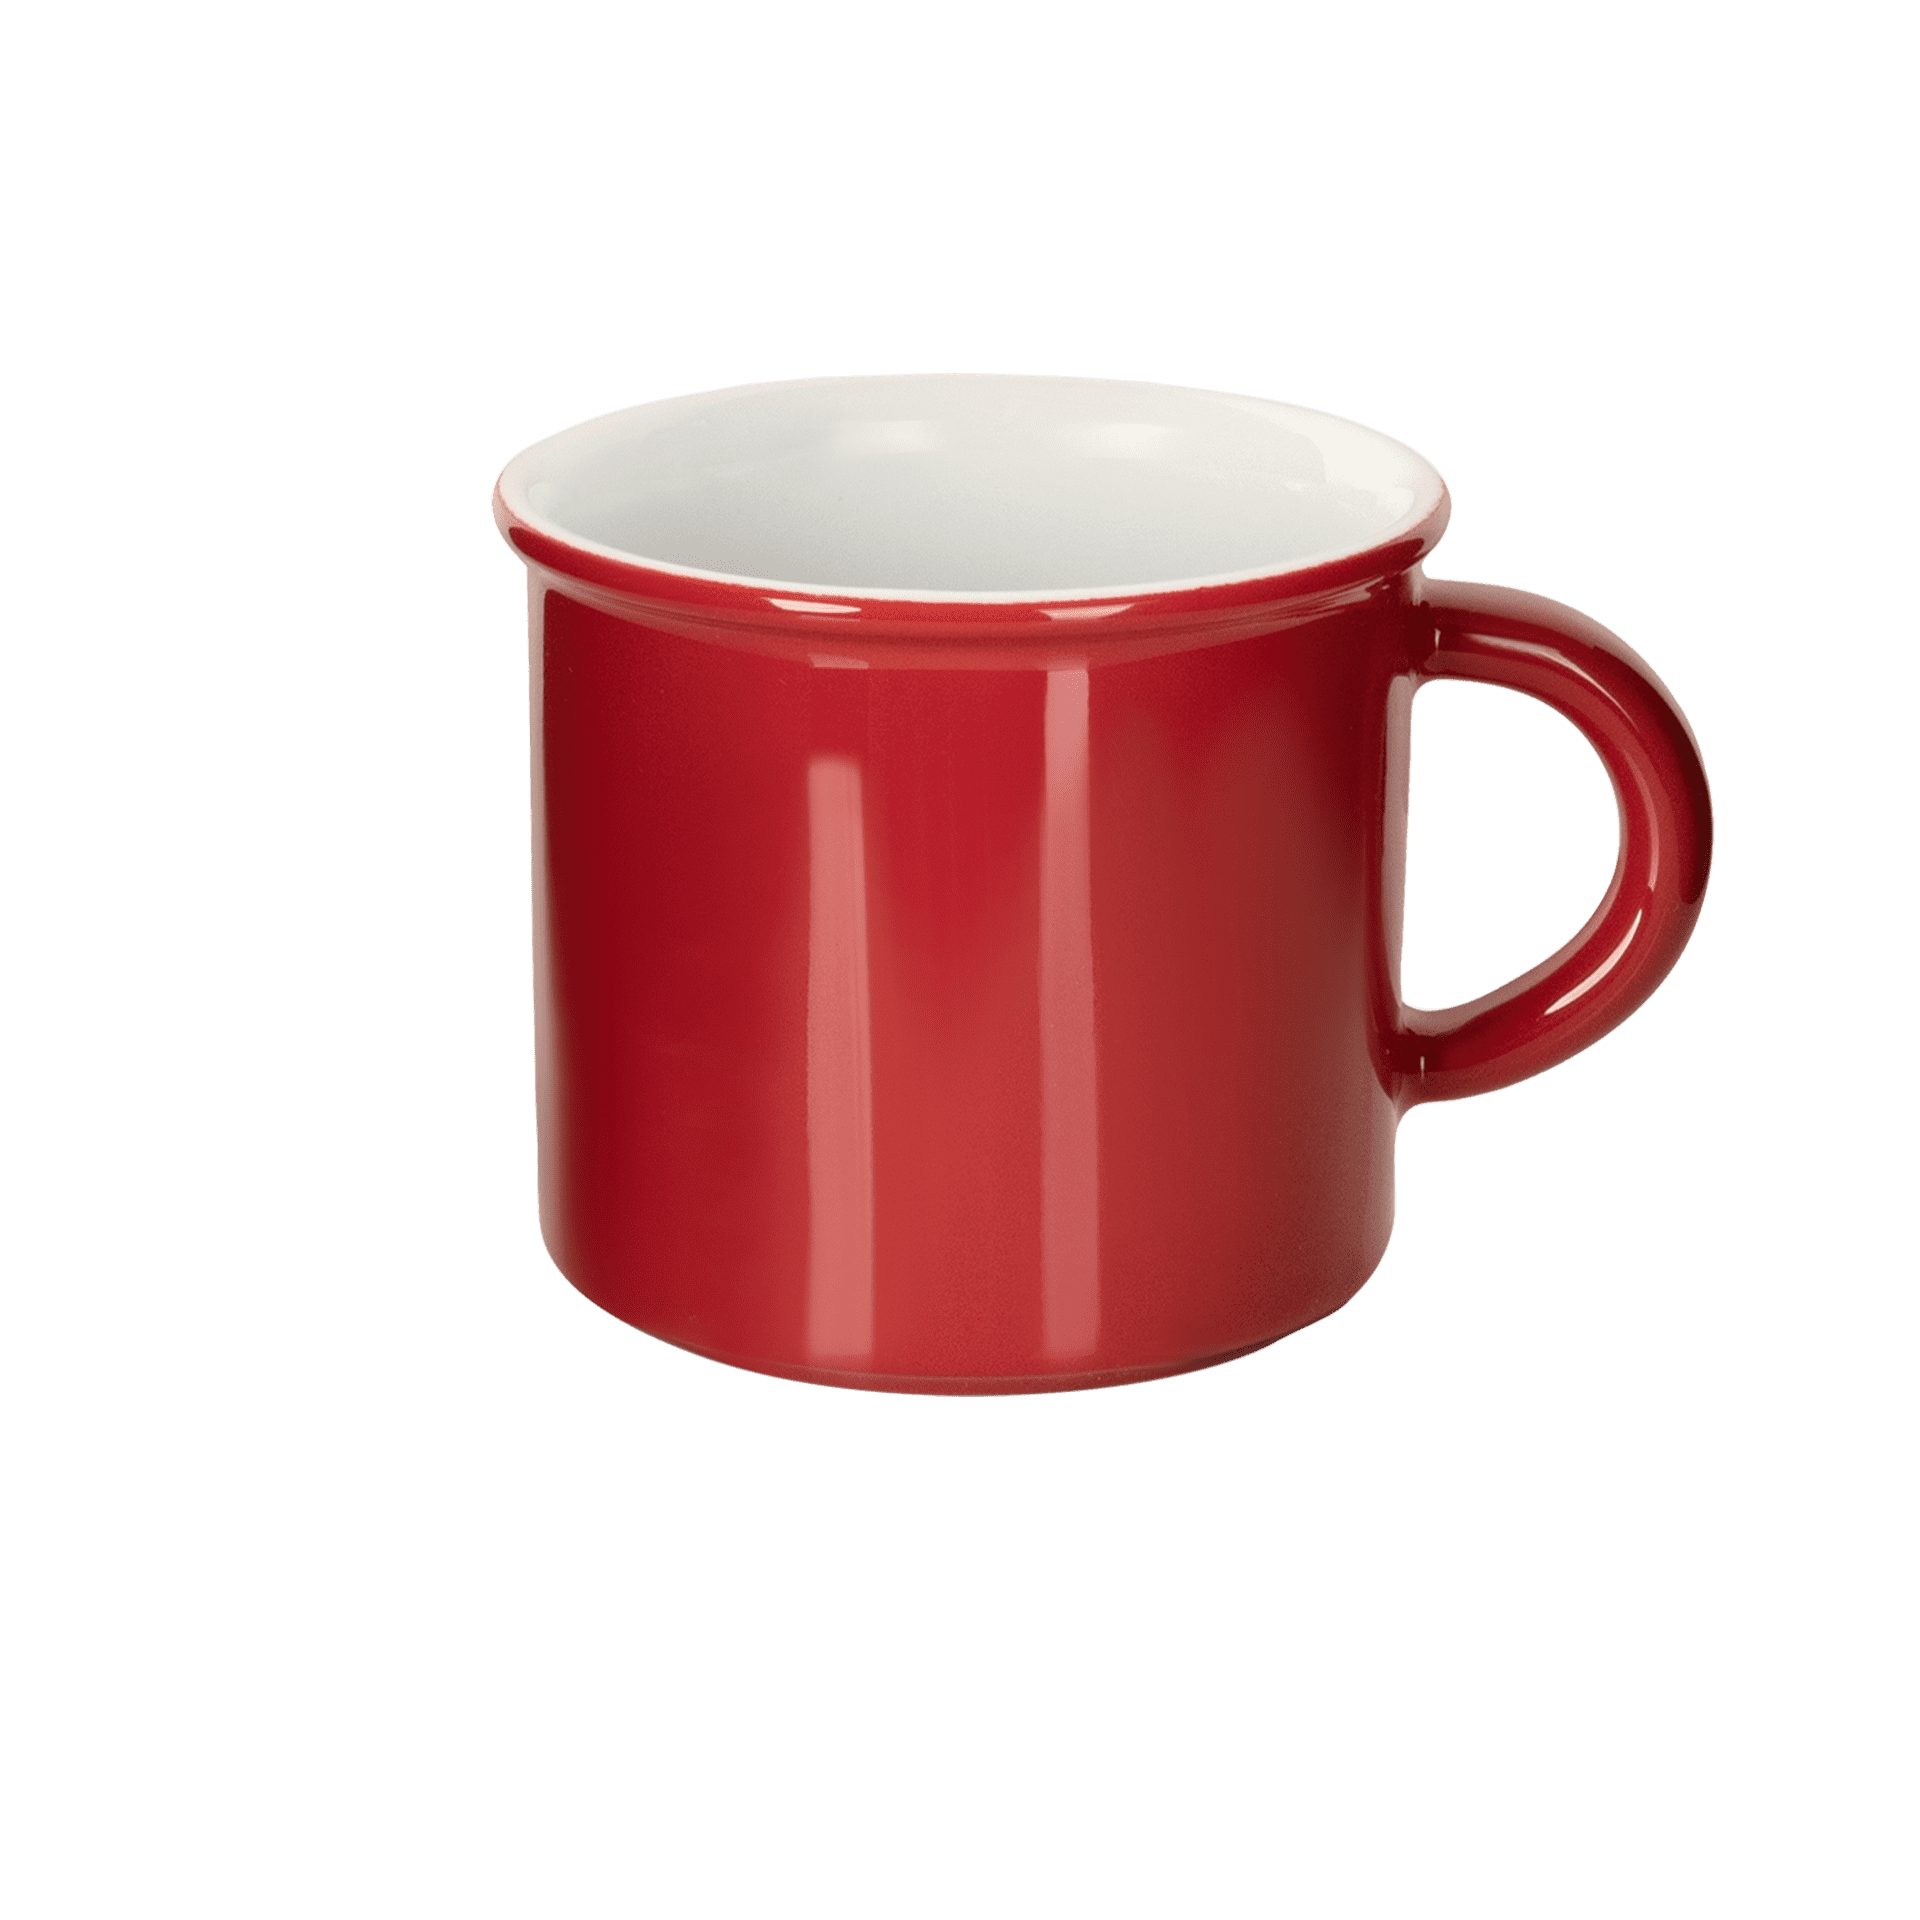 Mahlwerck Manufaktur Tasse Retro Kaffeetasse, Porzellan, 300 ml, spülmaschinenfest, 100 % klimaneutral, Made in EU Salsa Red, glänzend | Teetassen